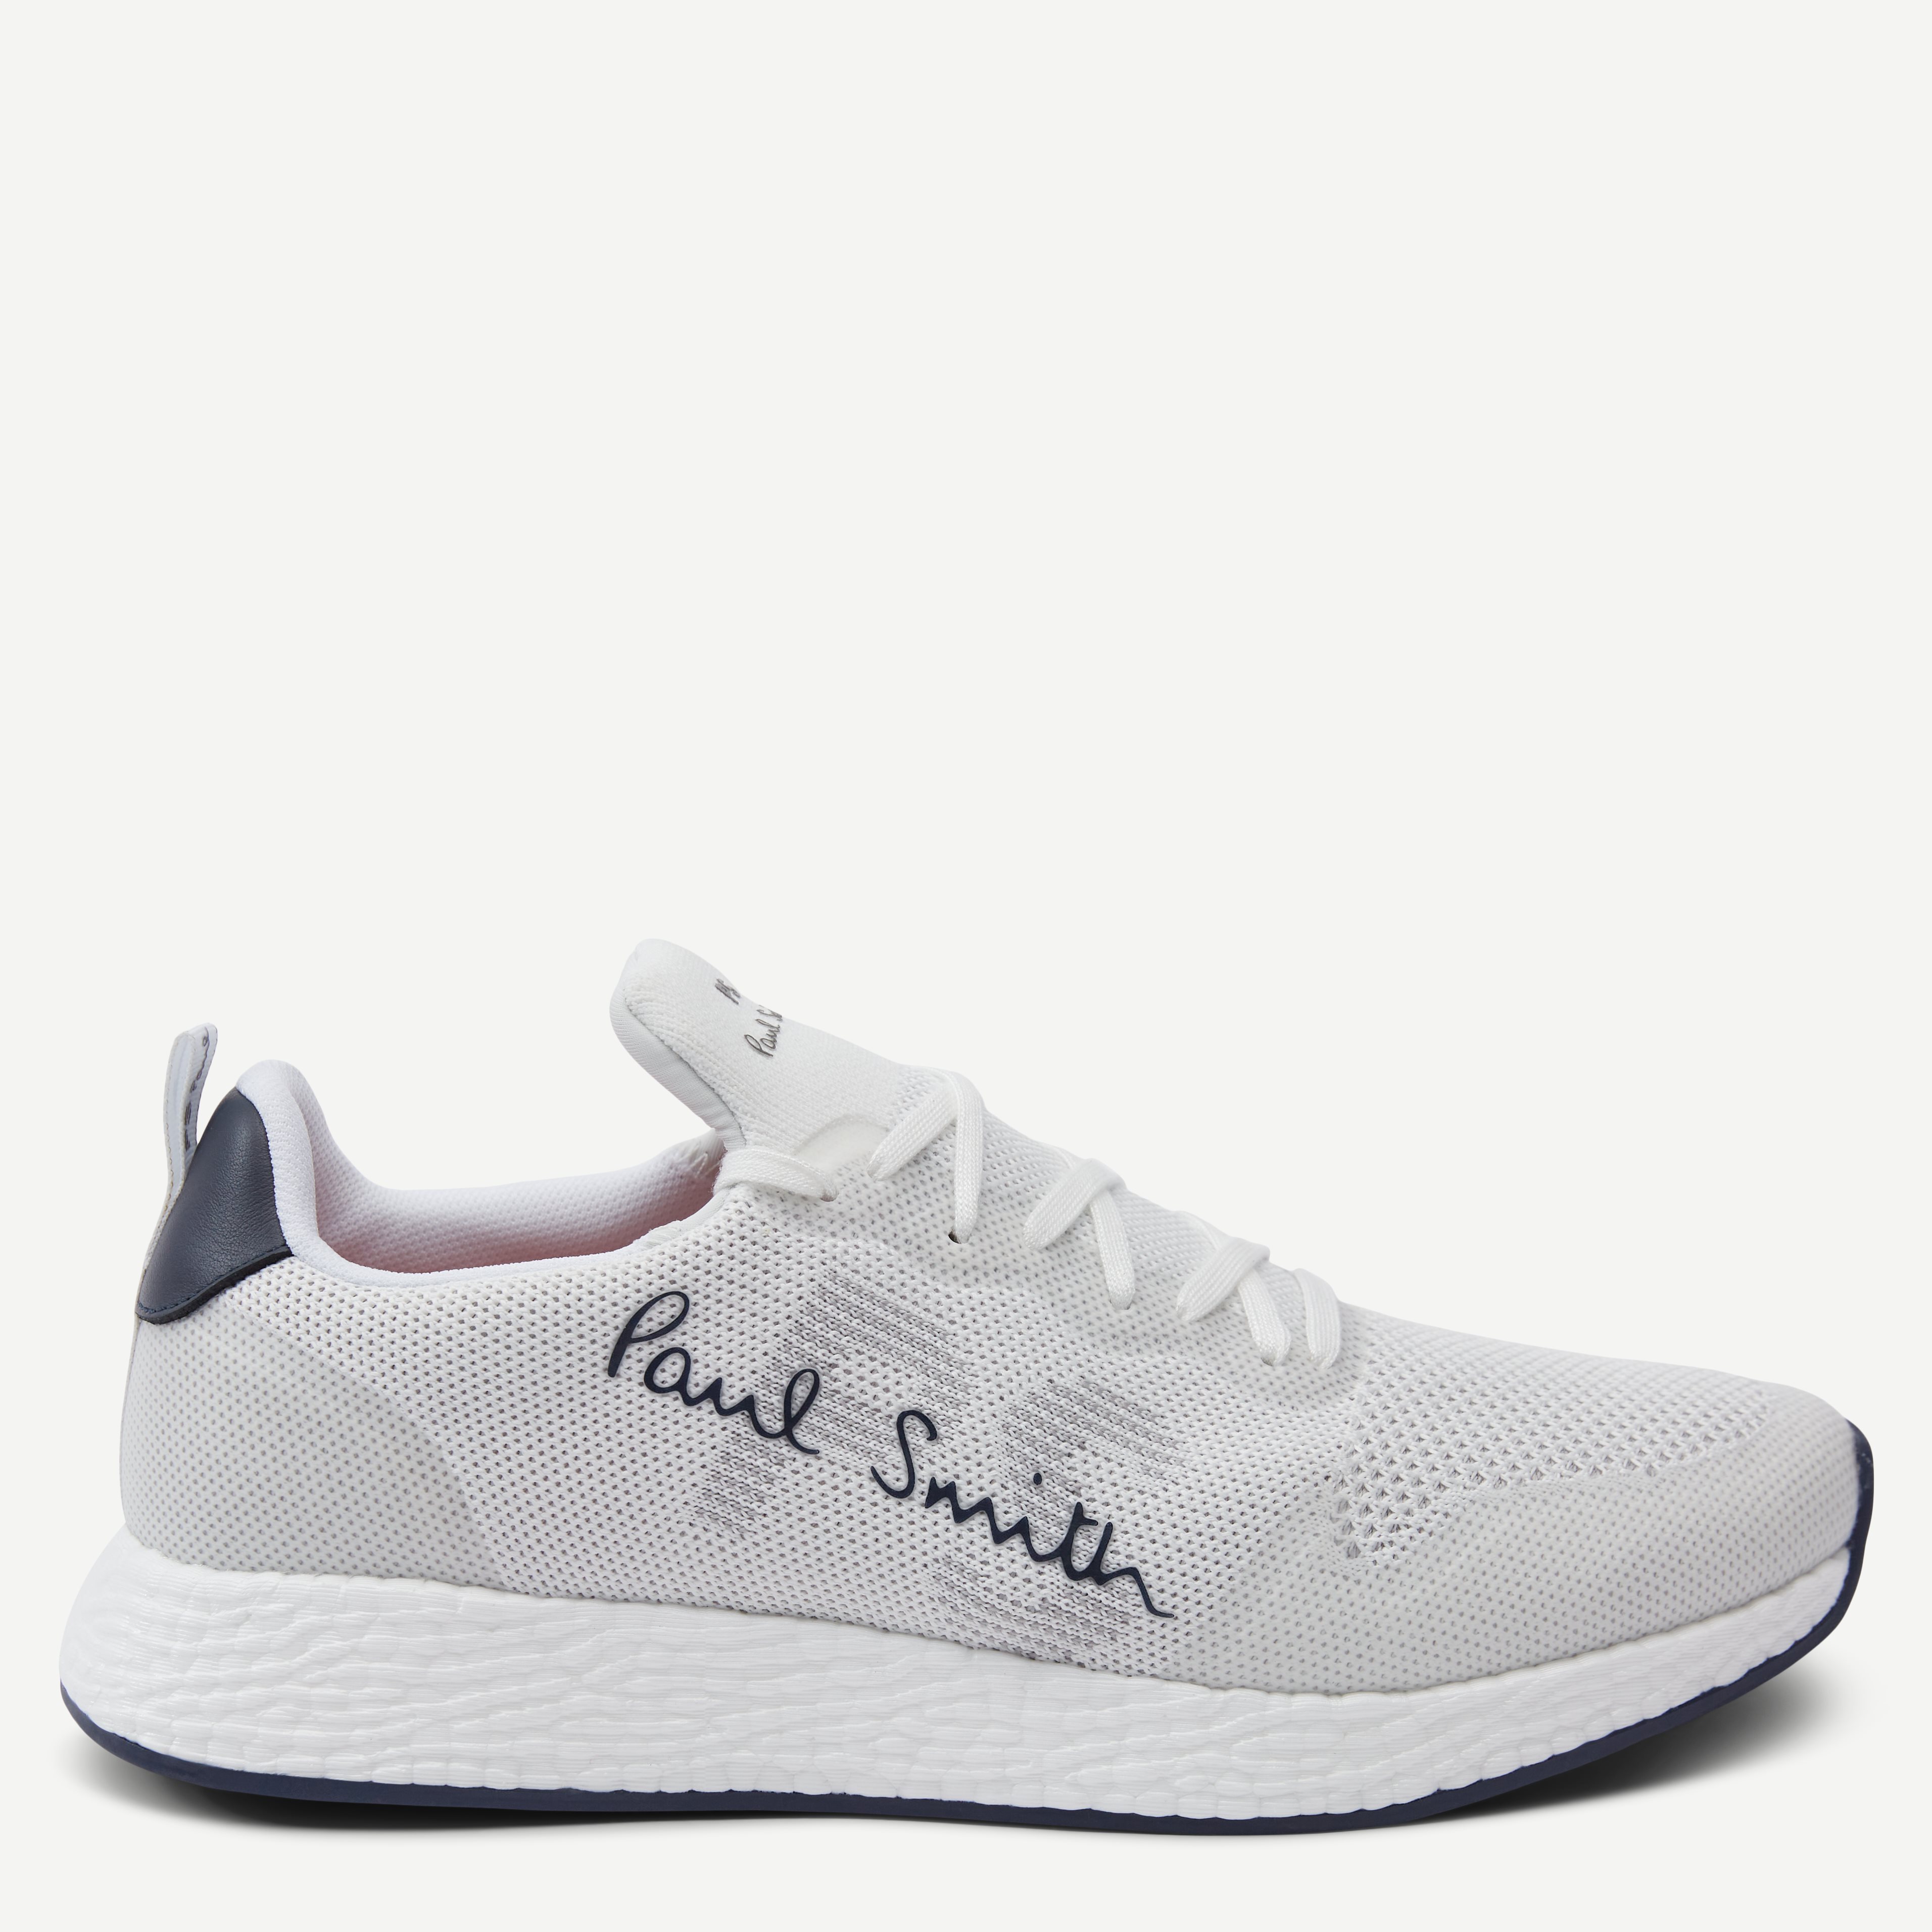 Paul Smith Shoes Sko KRS02 HPLY Hvid